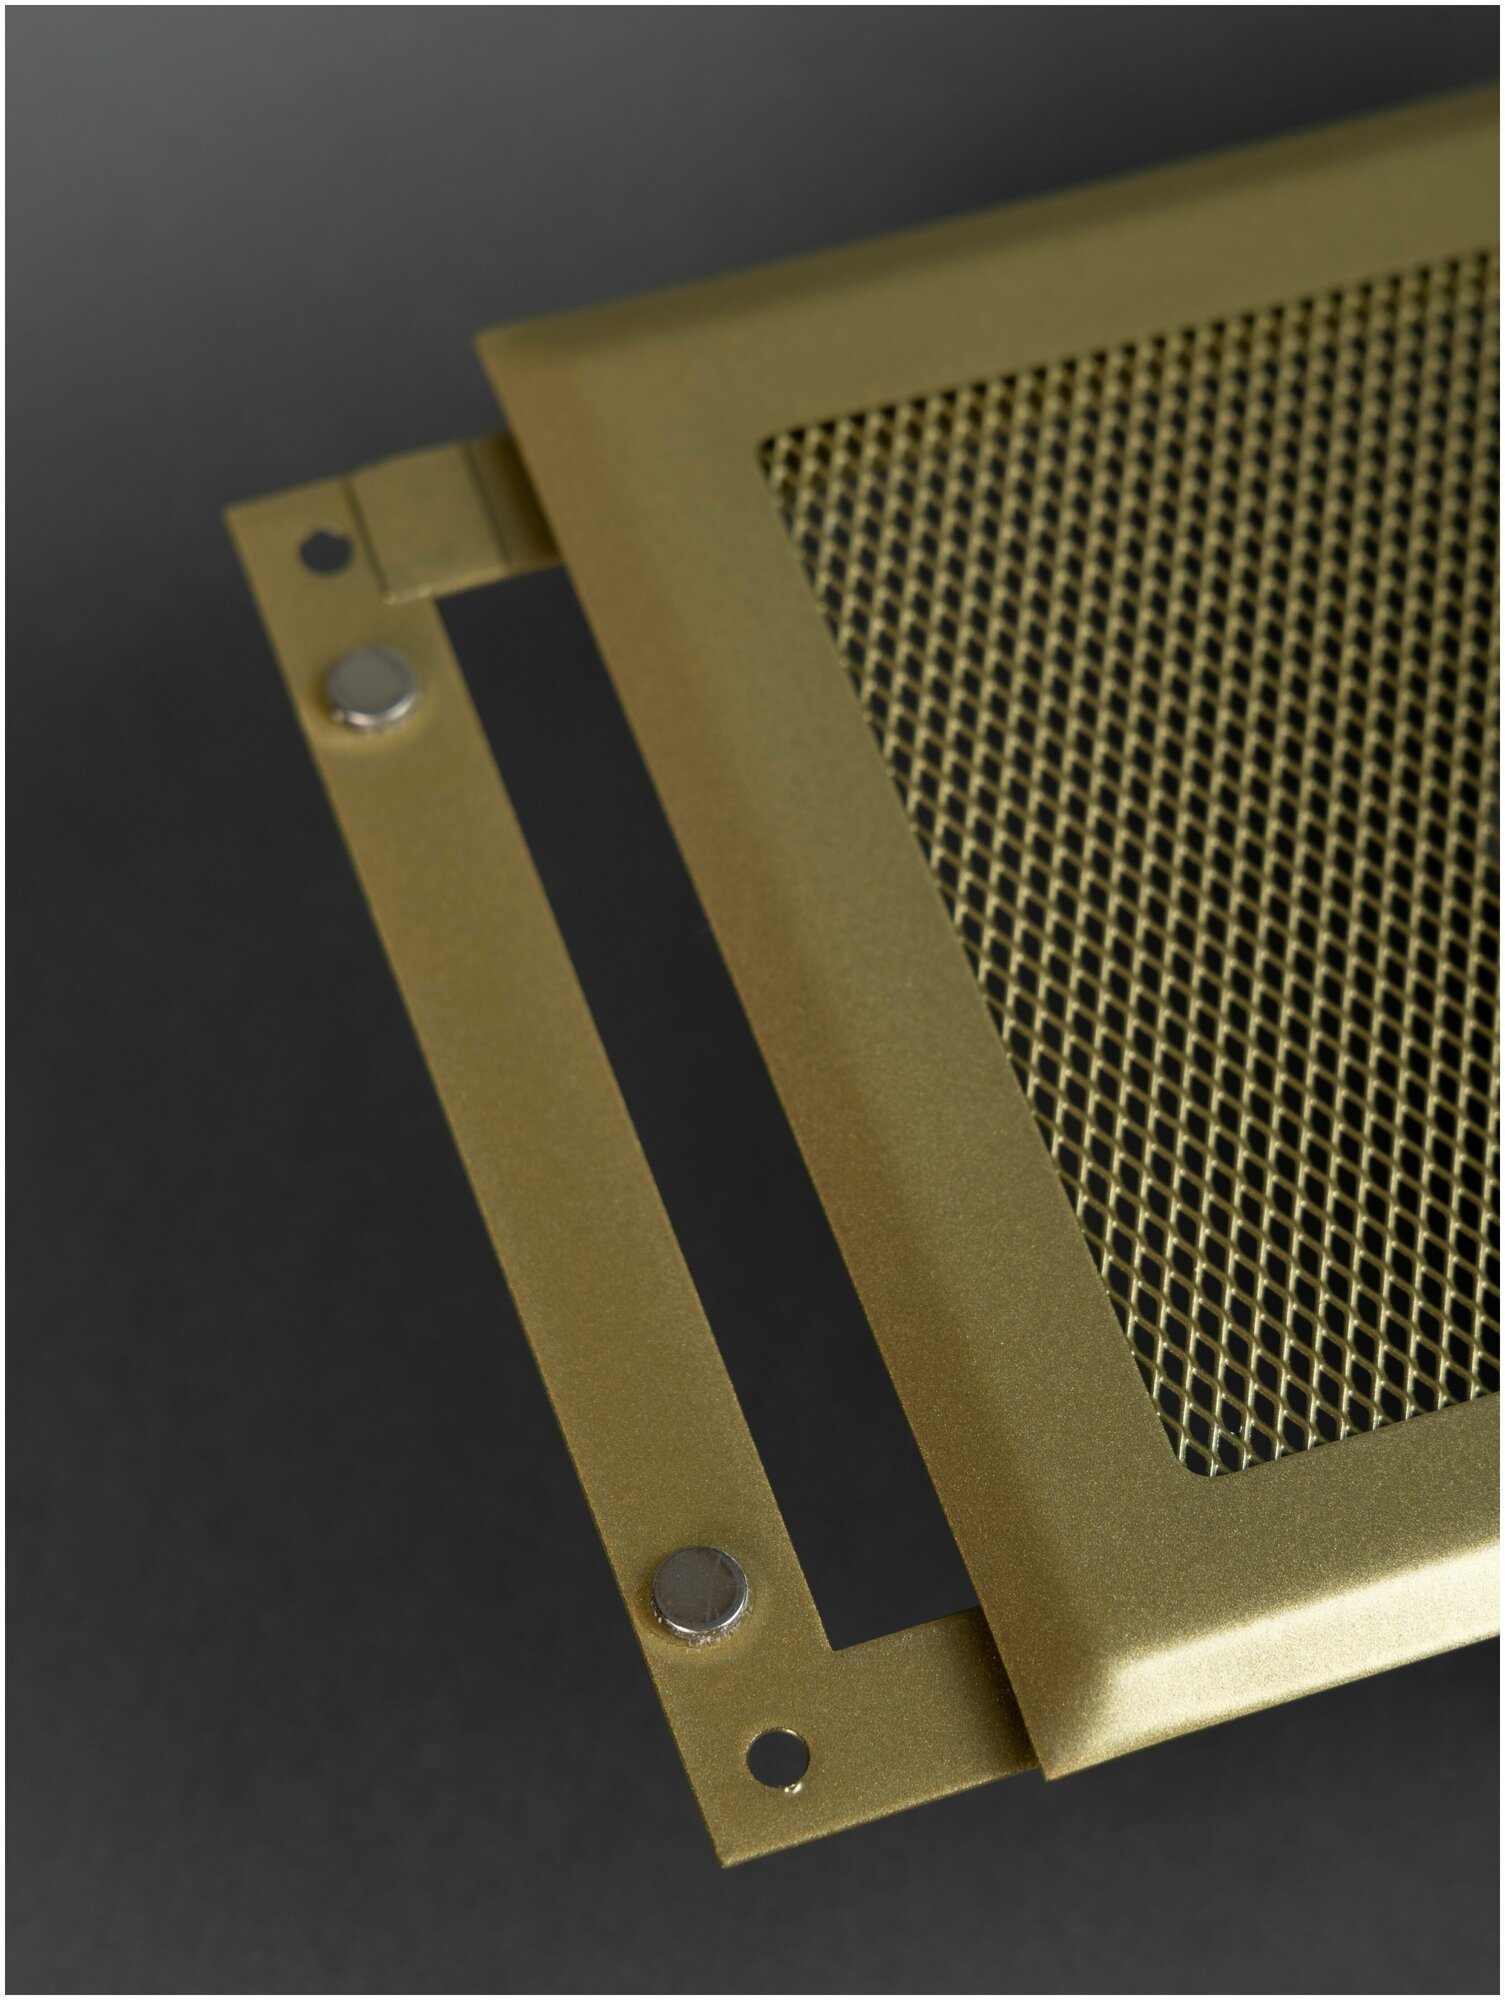 Решетка вентиляционная на магнитах 250x250 мм. съемная (РП250), металлическая, производство Родфер - фотография № 4